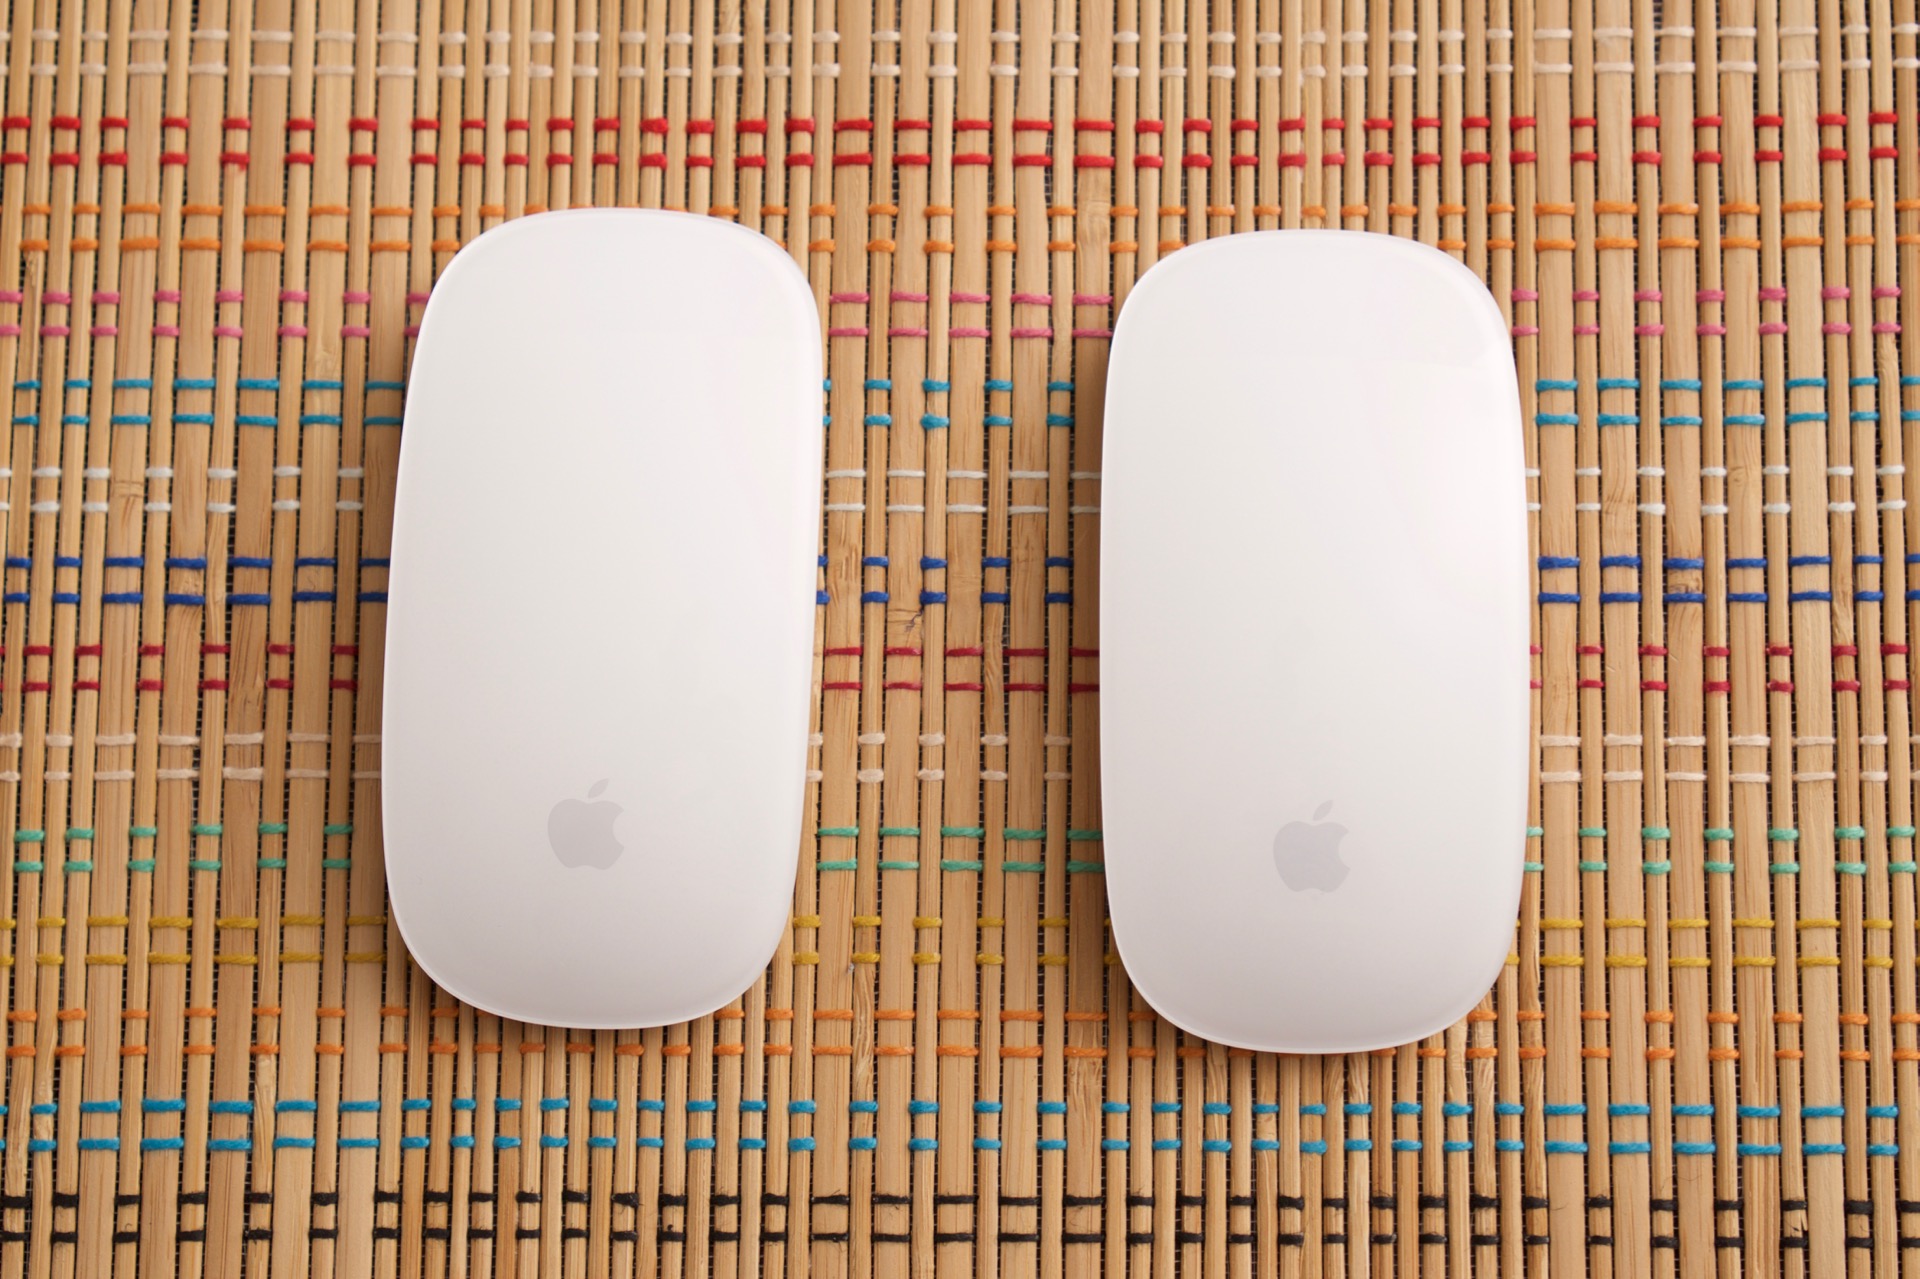 Mini-review: Apple's new Magic Keyboard, Magic Mouse 2, and Magic